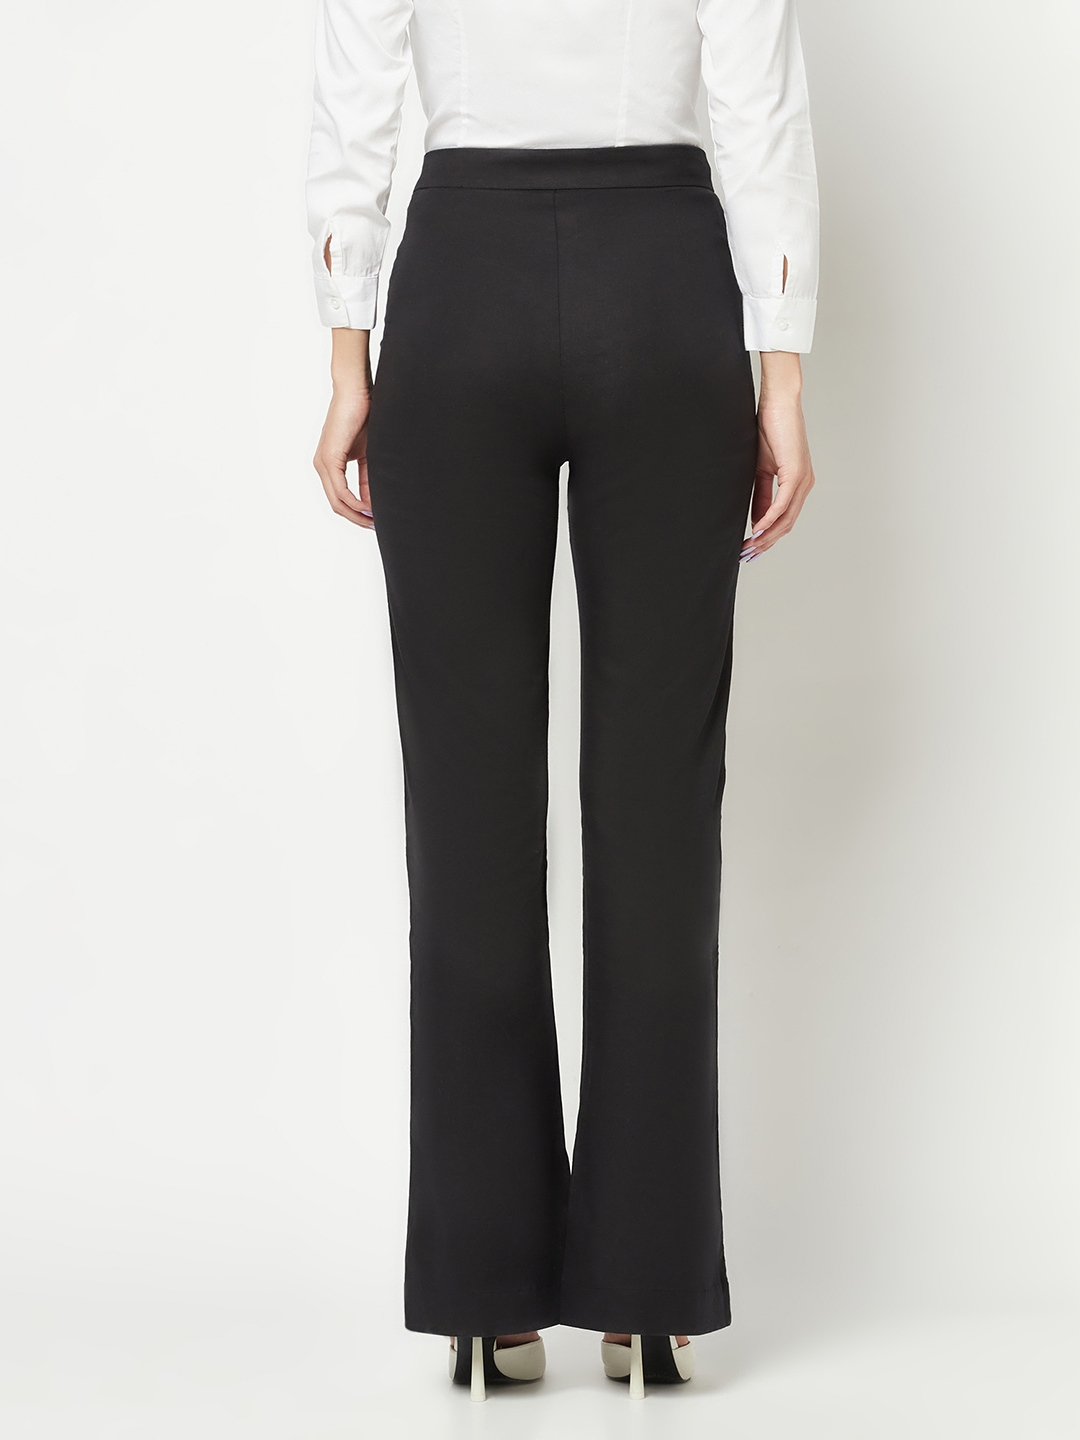 Buy MADAME Black Bootcut Trousers for Women Online  Tata CLiQ